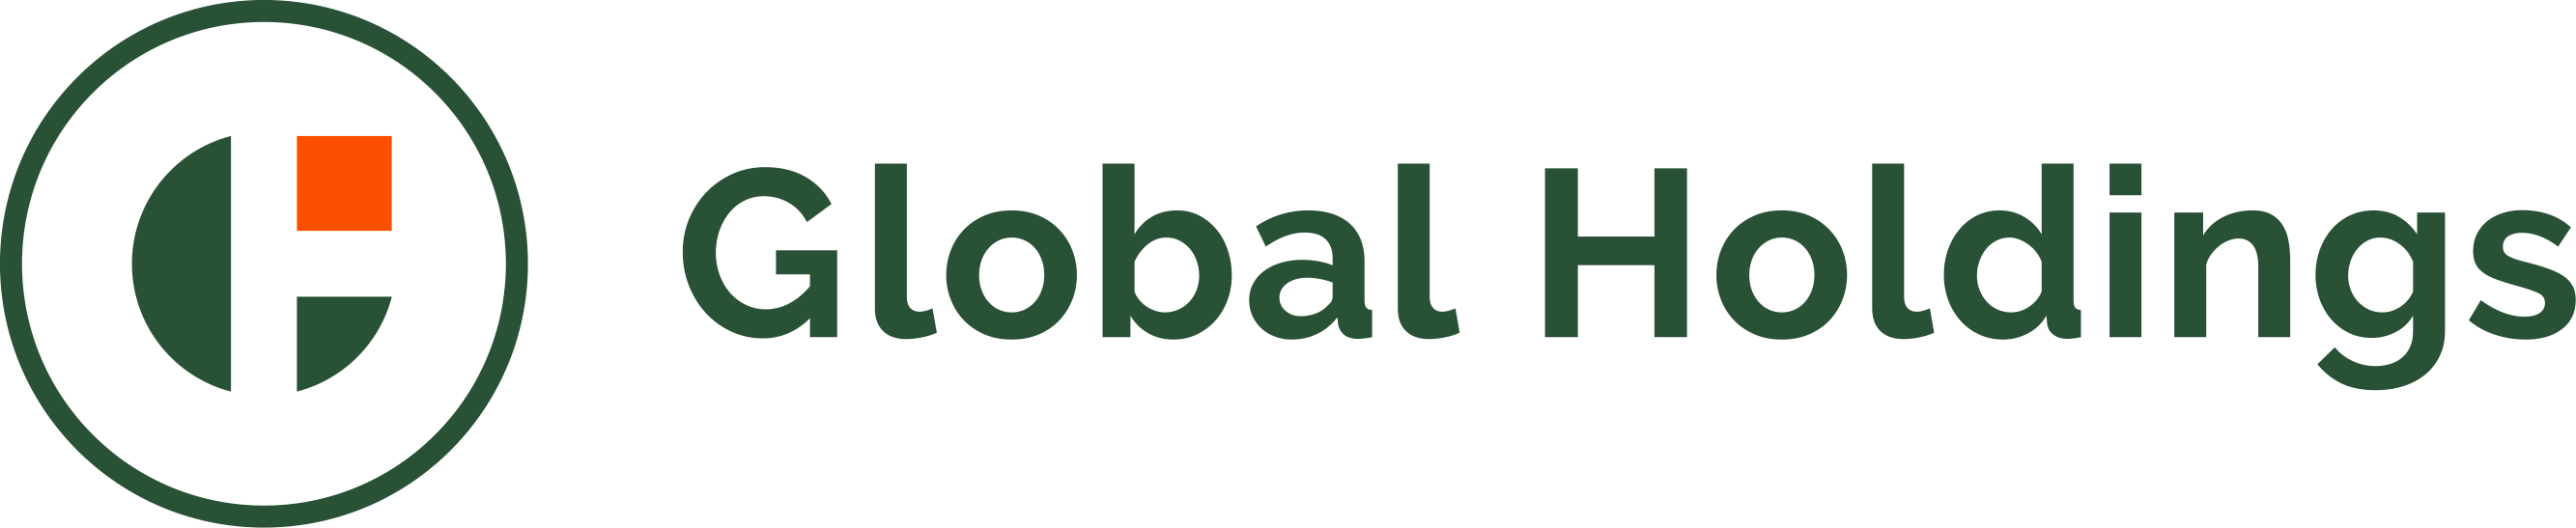 Global Holdings 2000, SL